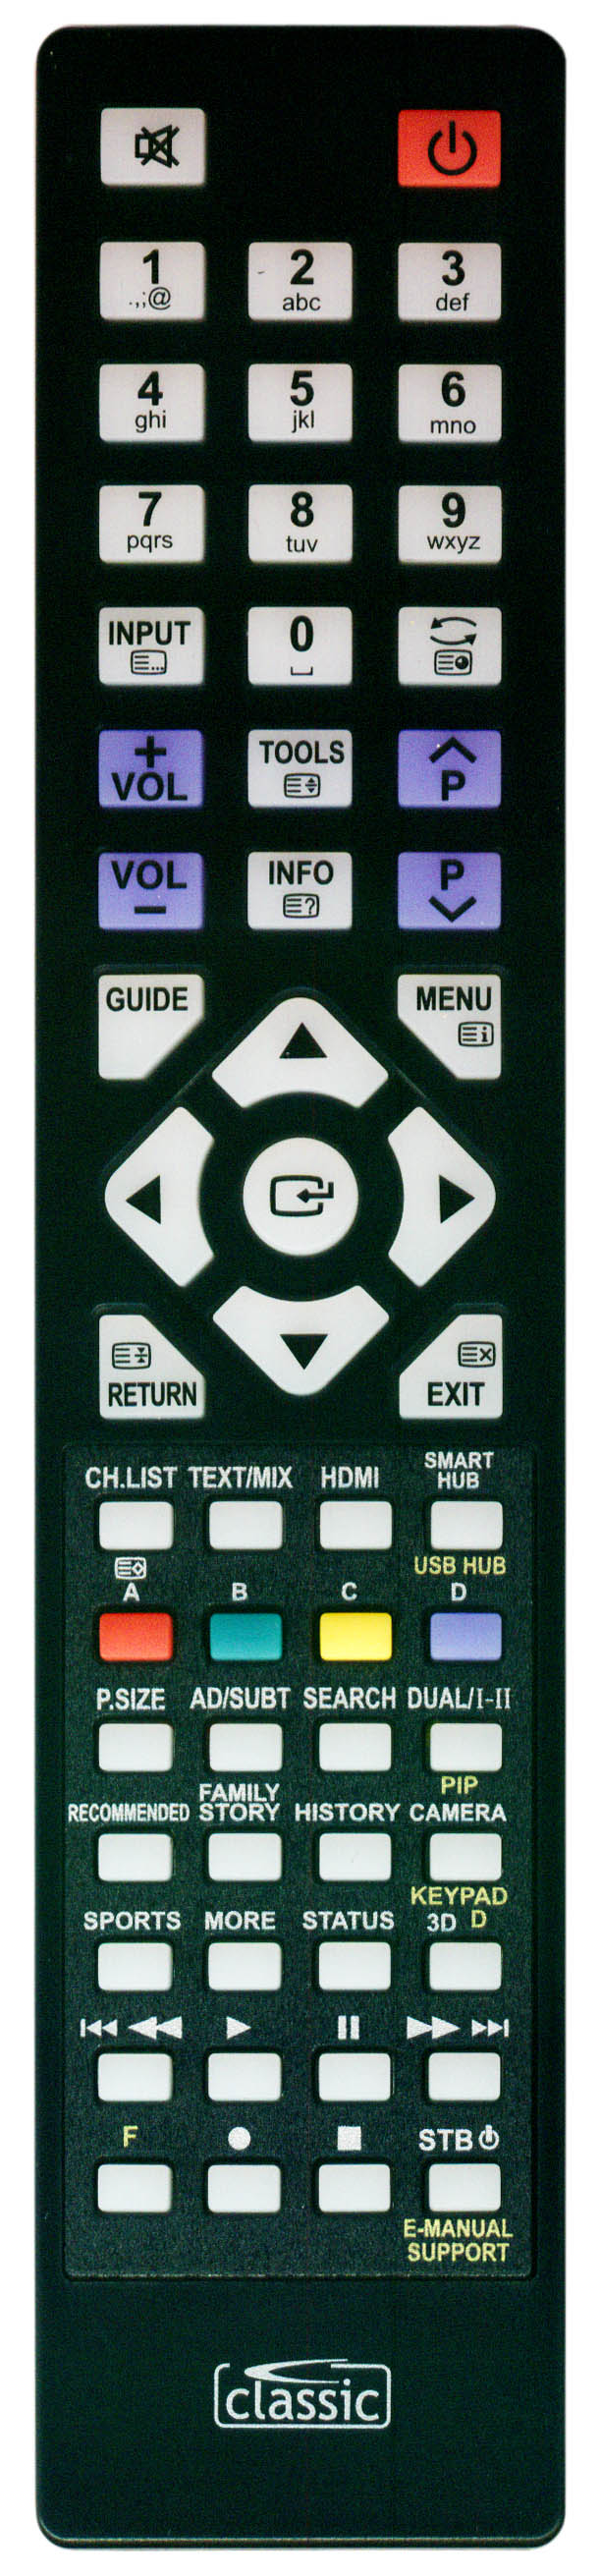 Samsung UE58J5200AWXXN Remote Control